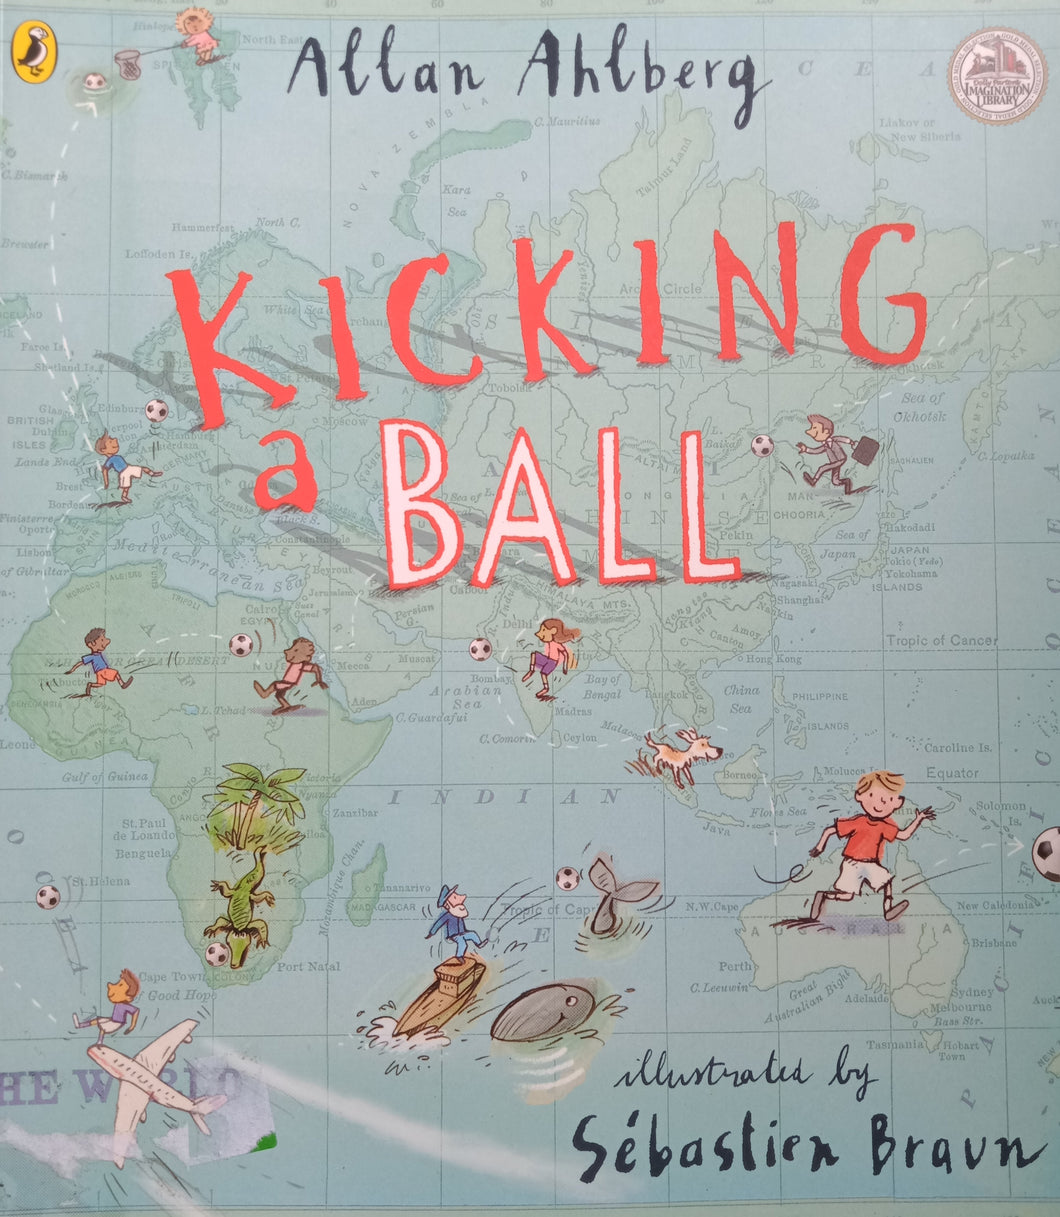 Kicking A Ball By: Allan Ahlberg